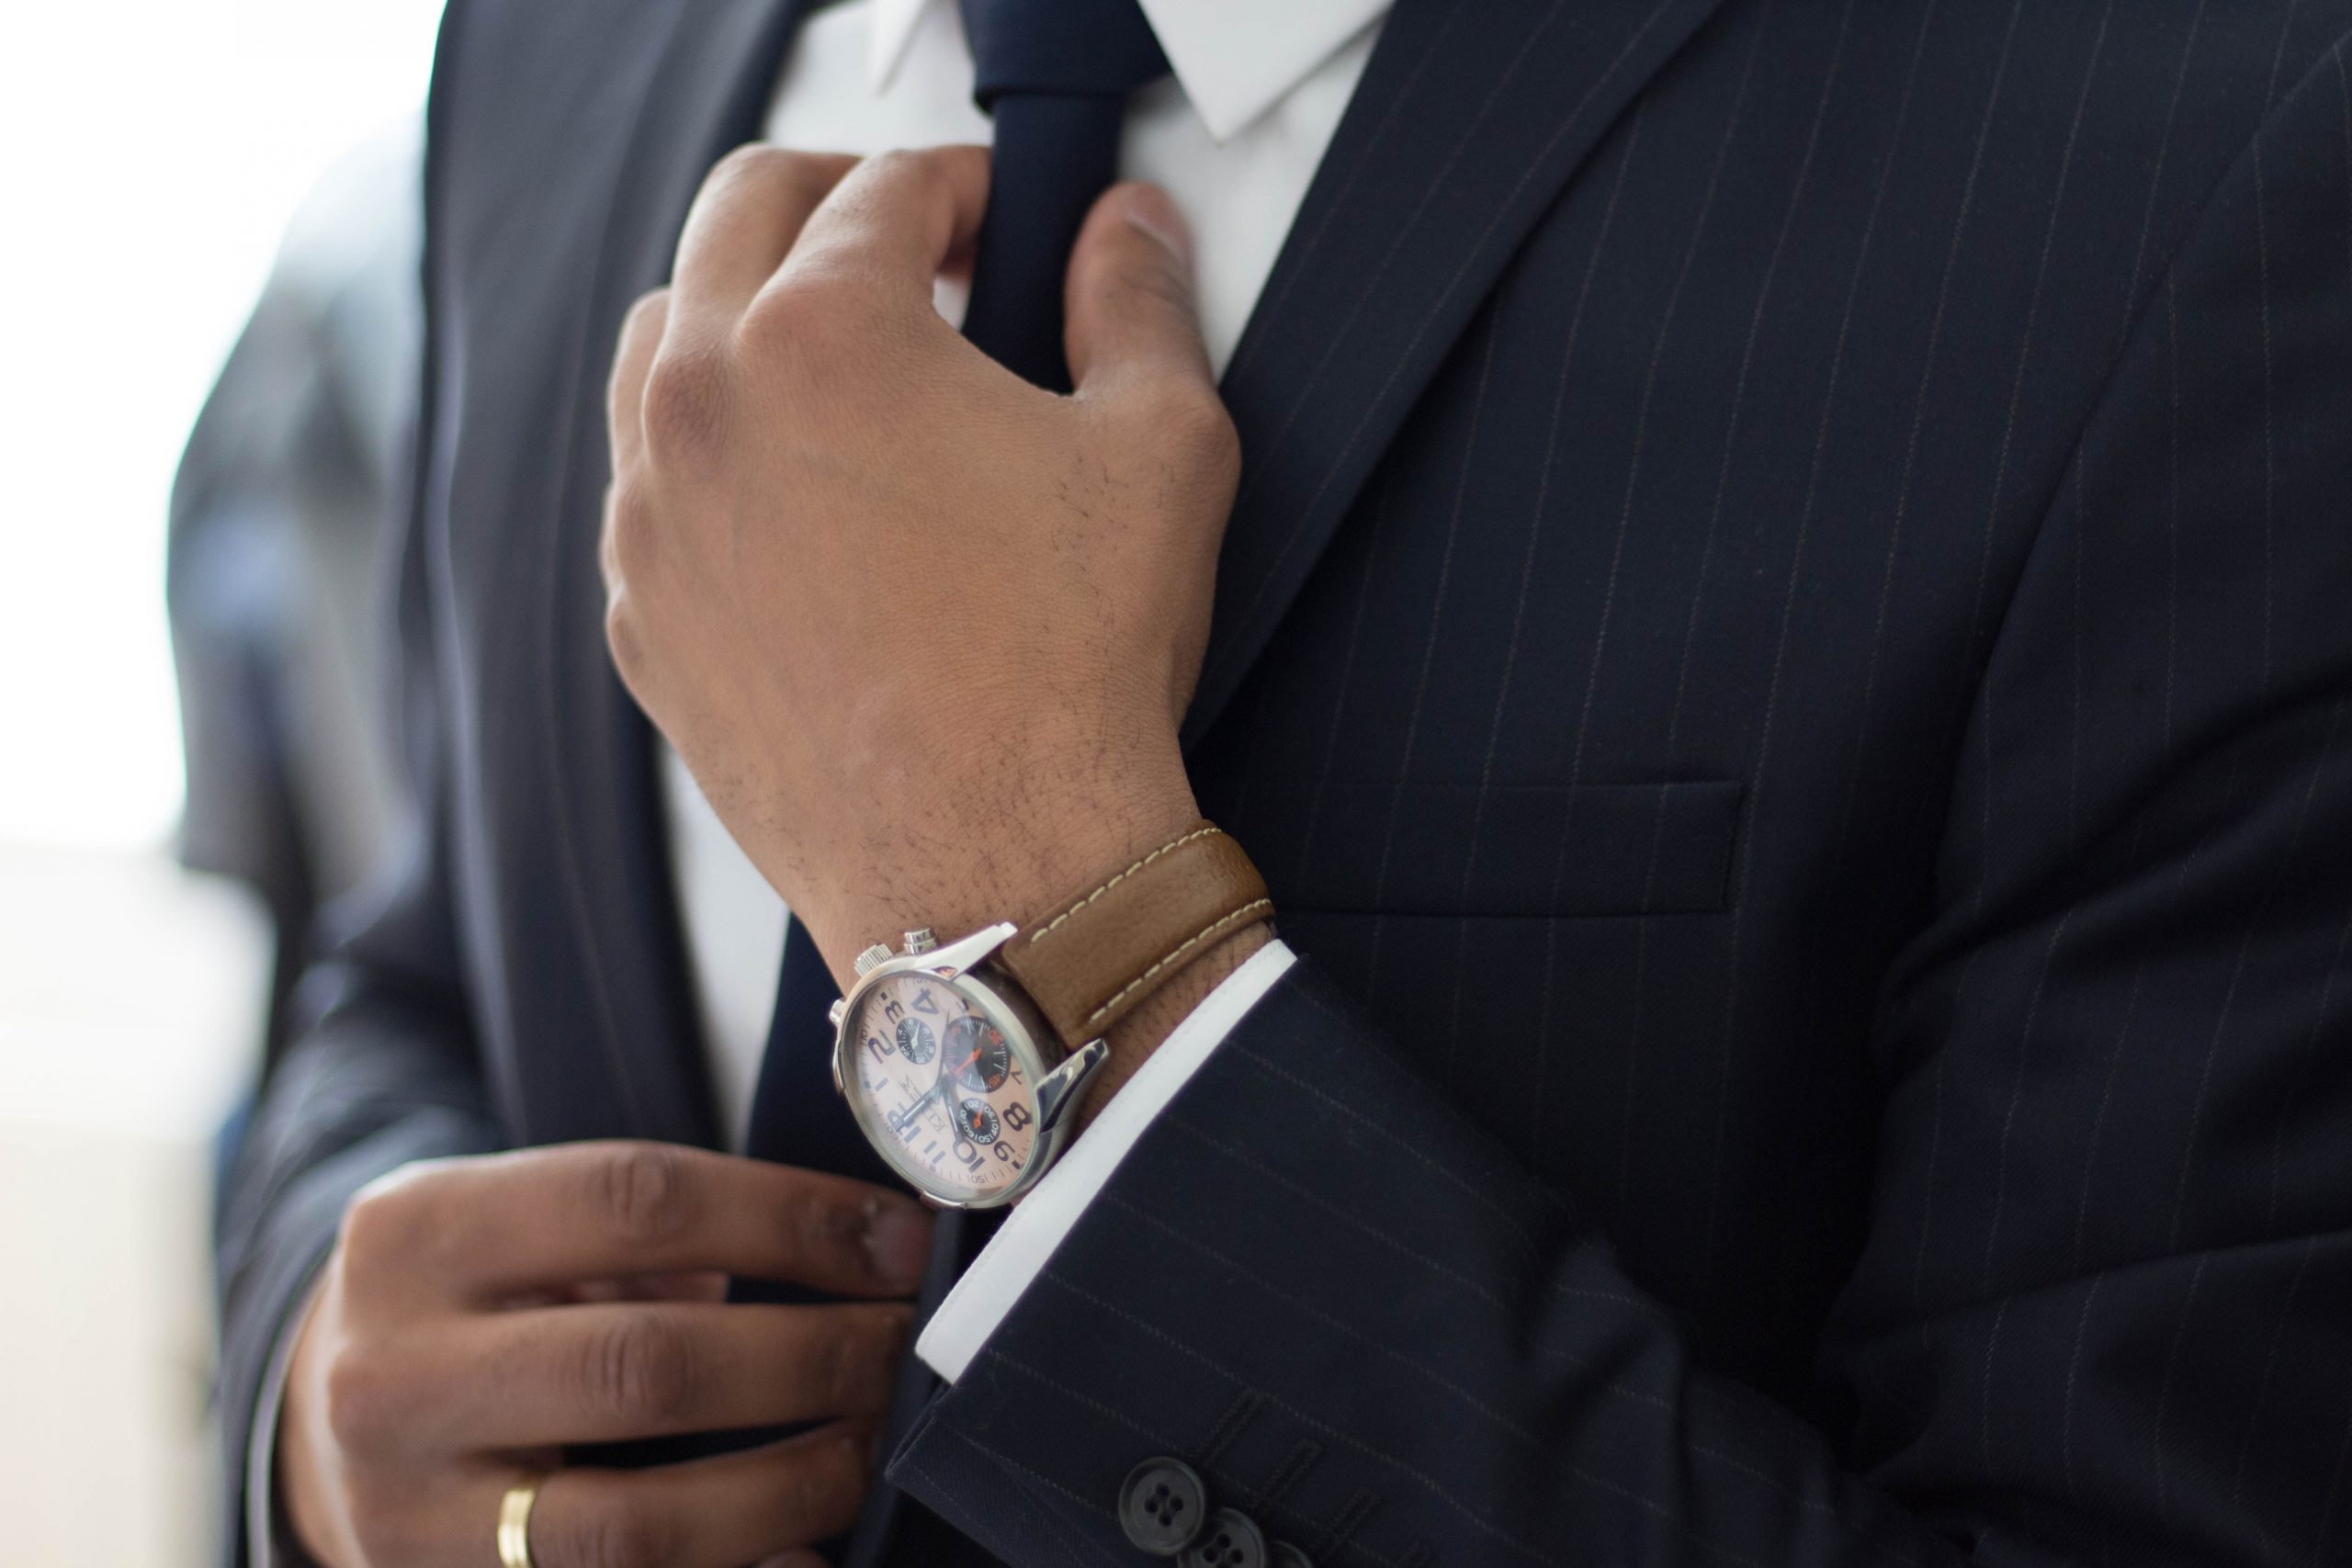 A person in formal attire, adjusting their tie